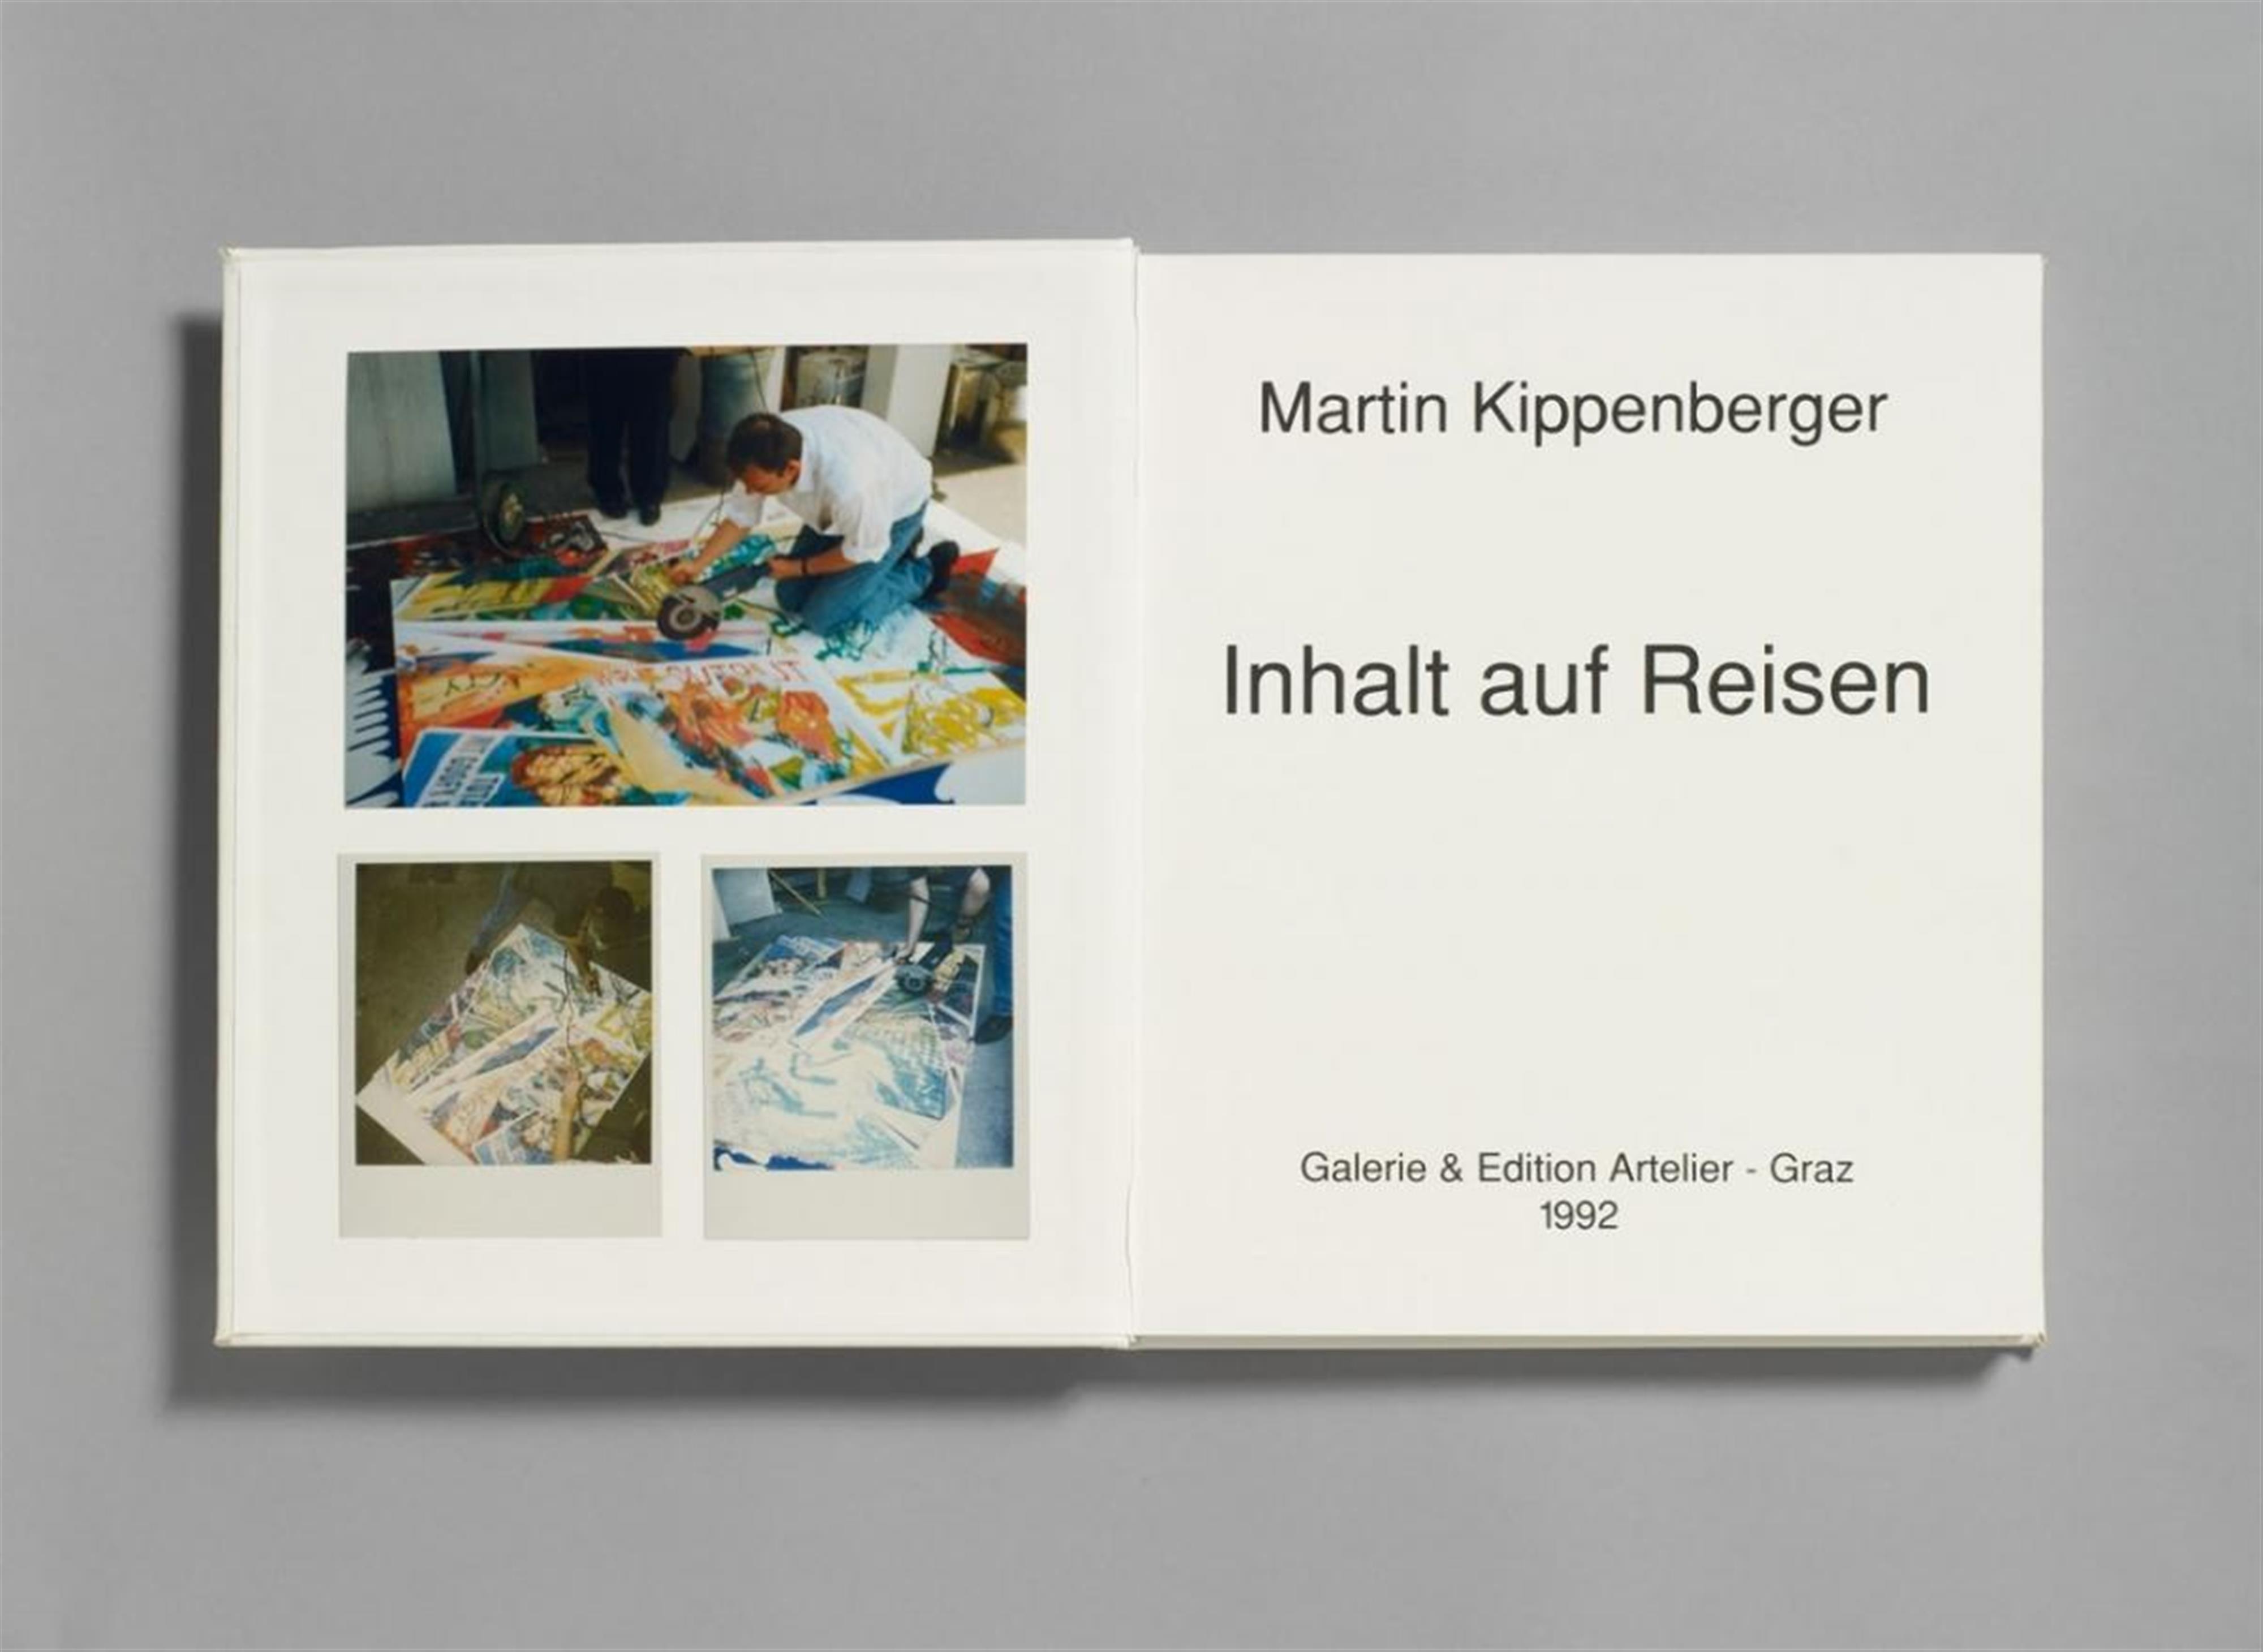 Martin Kippenberger - I.A.R.Inhalt auf Reisen (I.A.R. Content while Traveling) - image-1